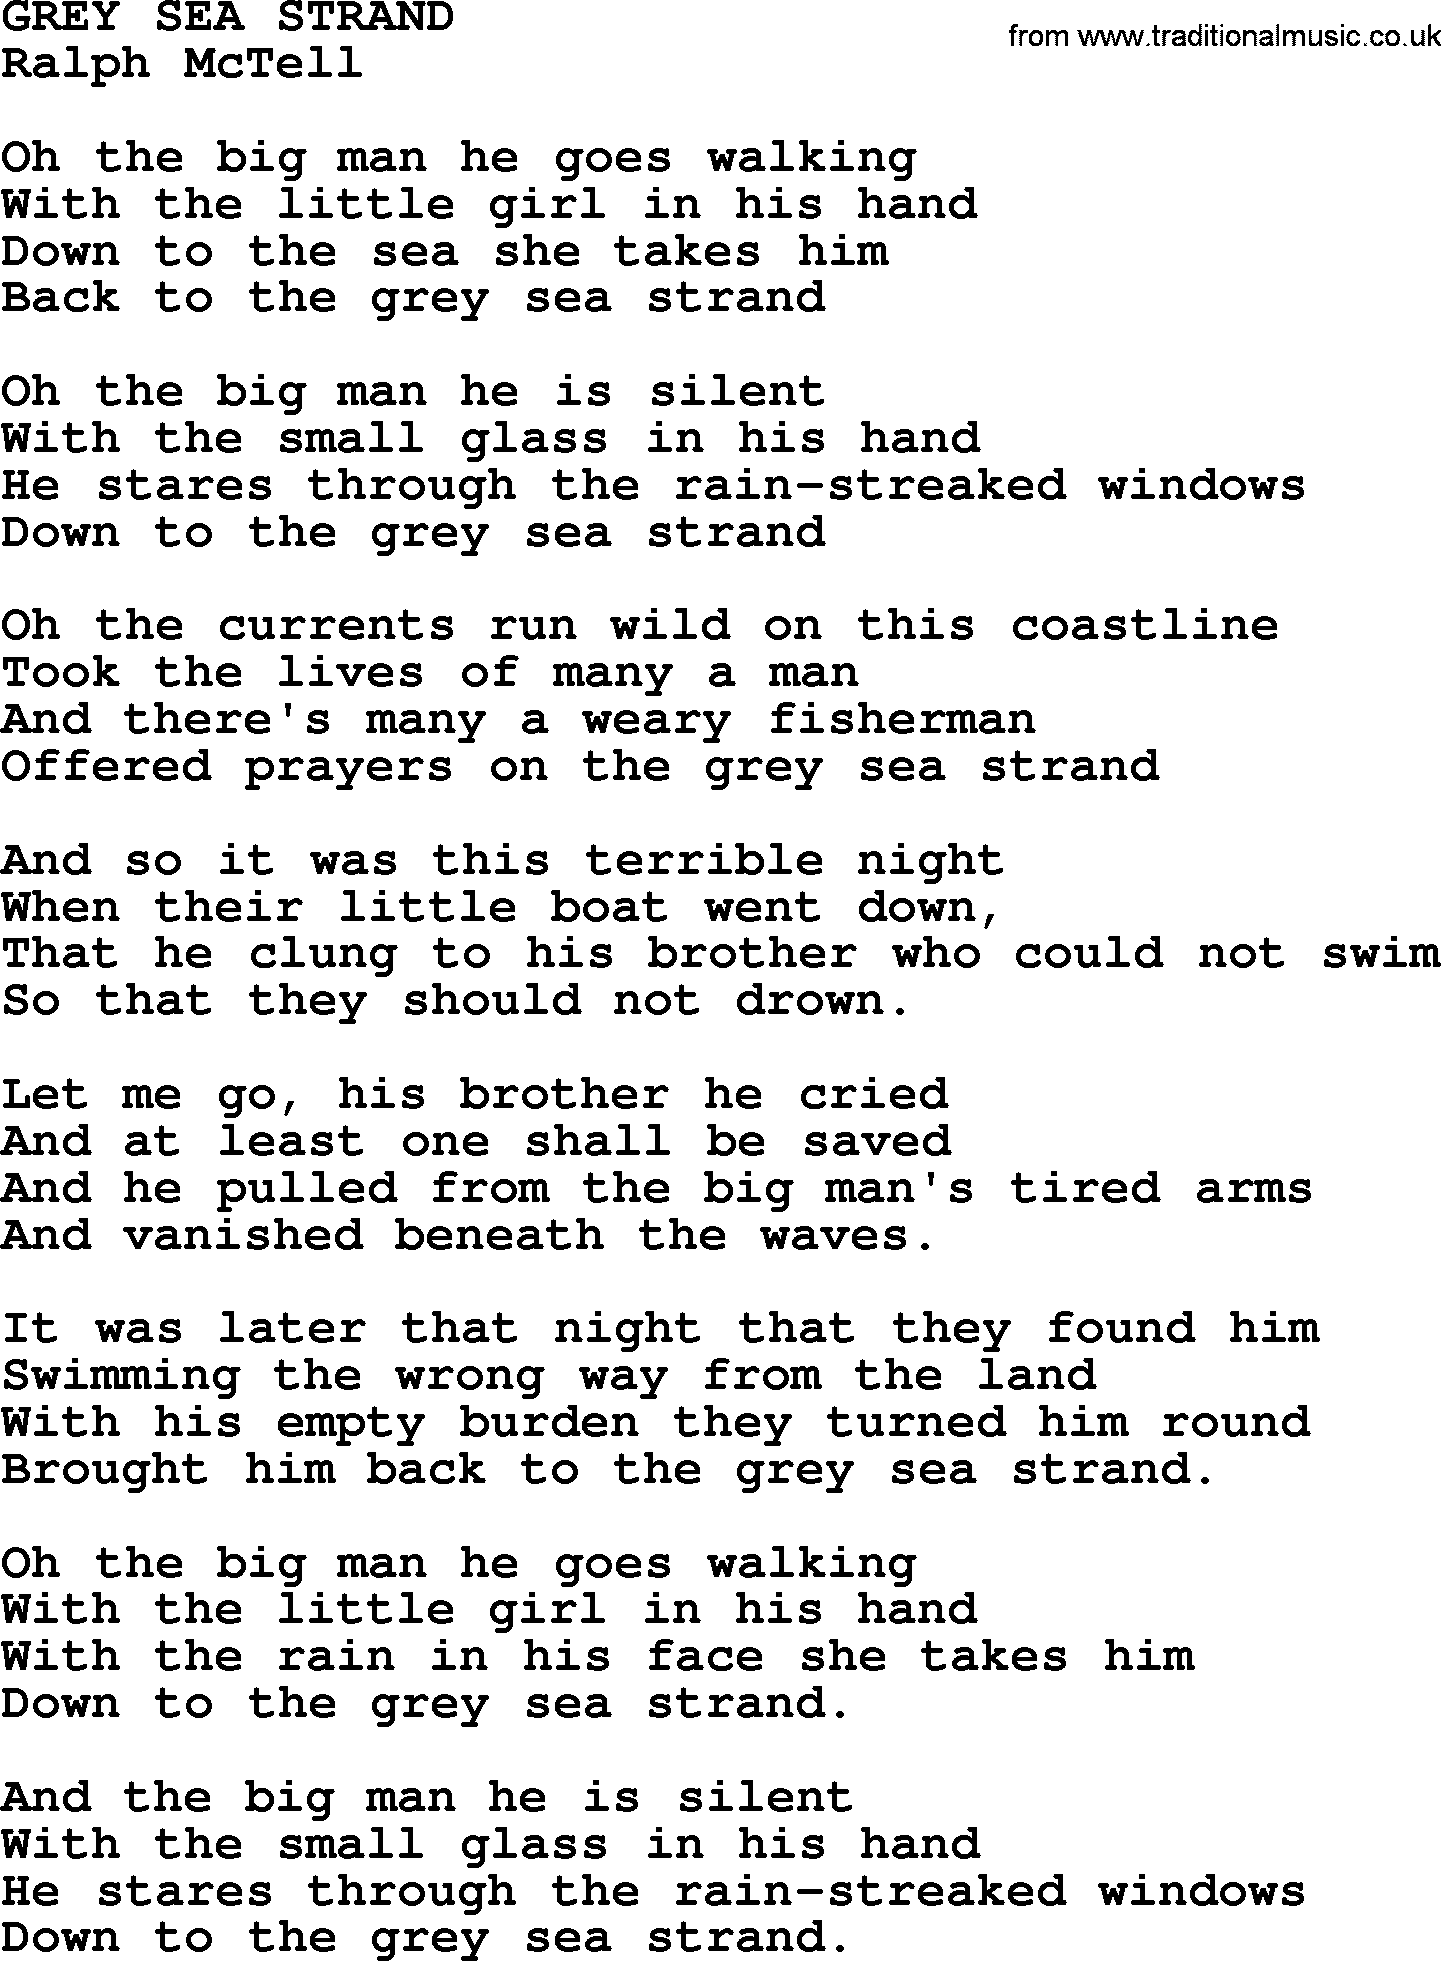 Ralph McTell Song: Grey Sea Strand, lyrics